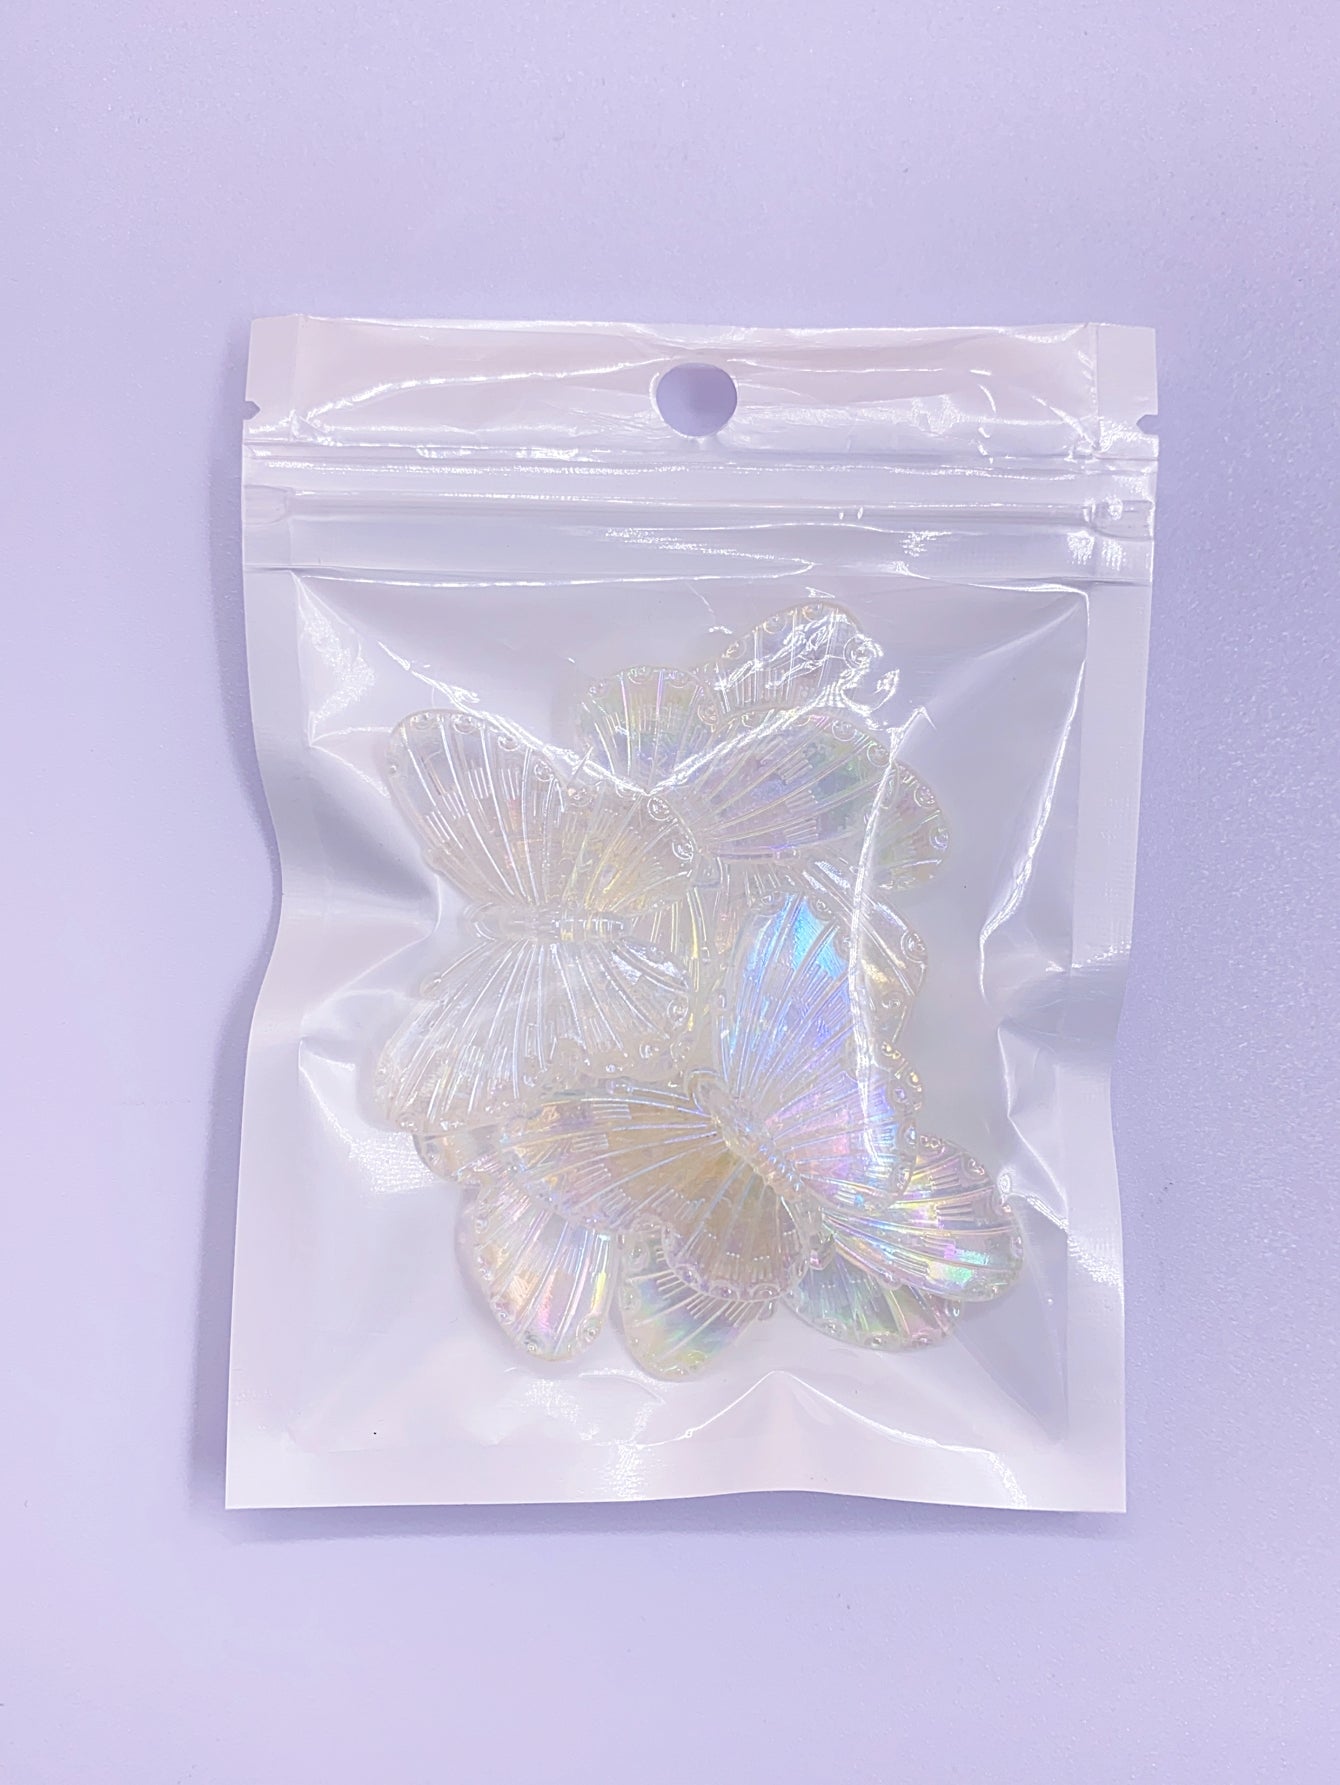 Elegant Butterfly ABS material imitation pearl half patch hair clip hair card handmade diy accessories